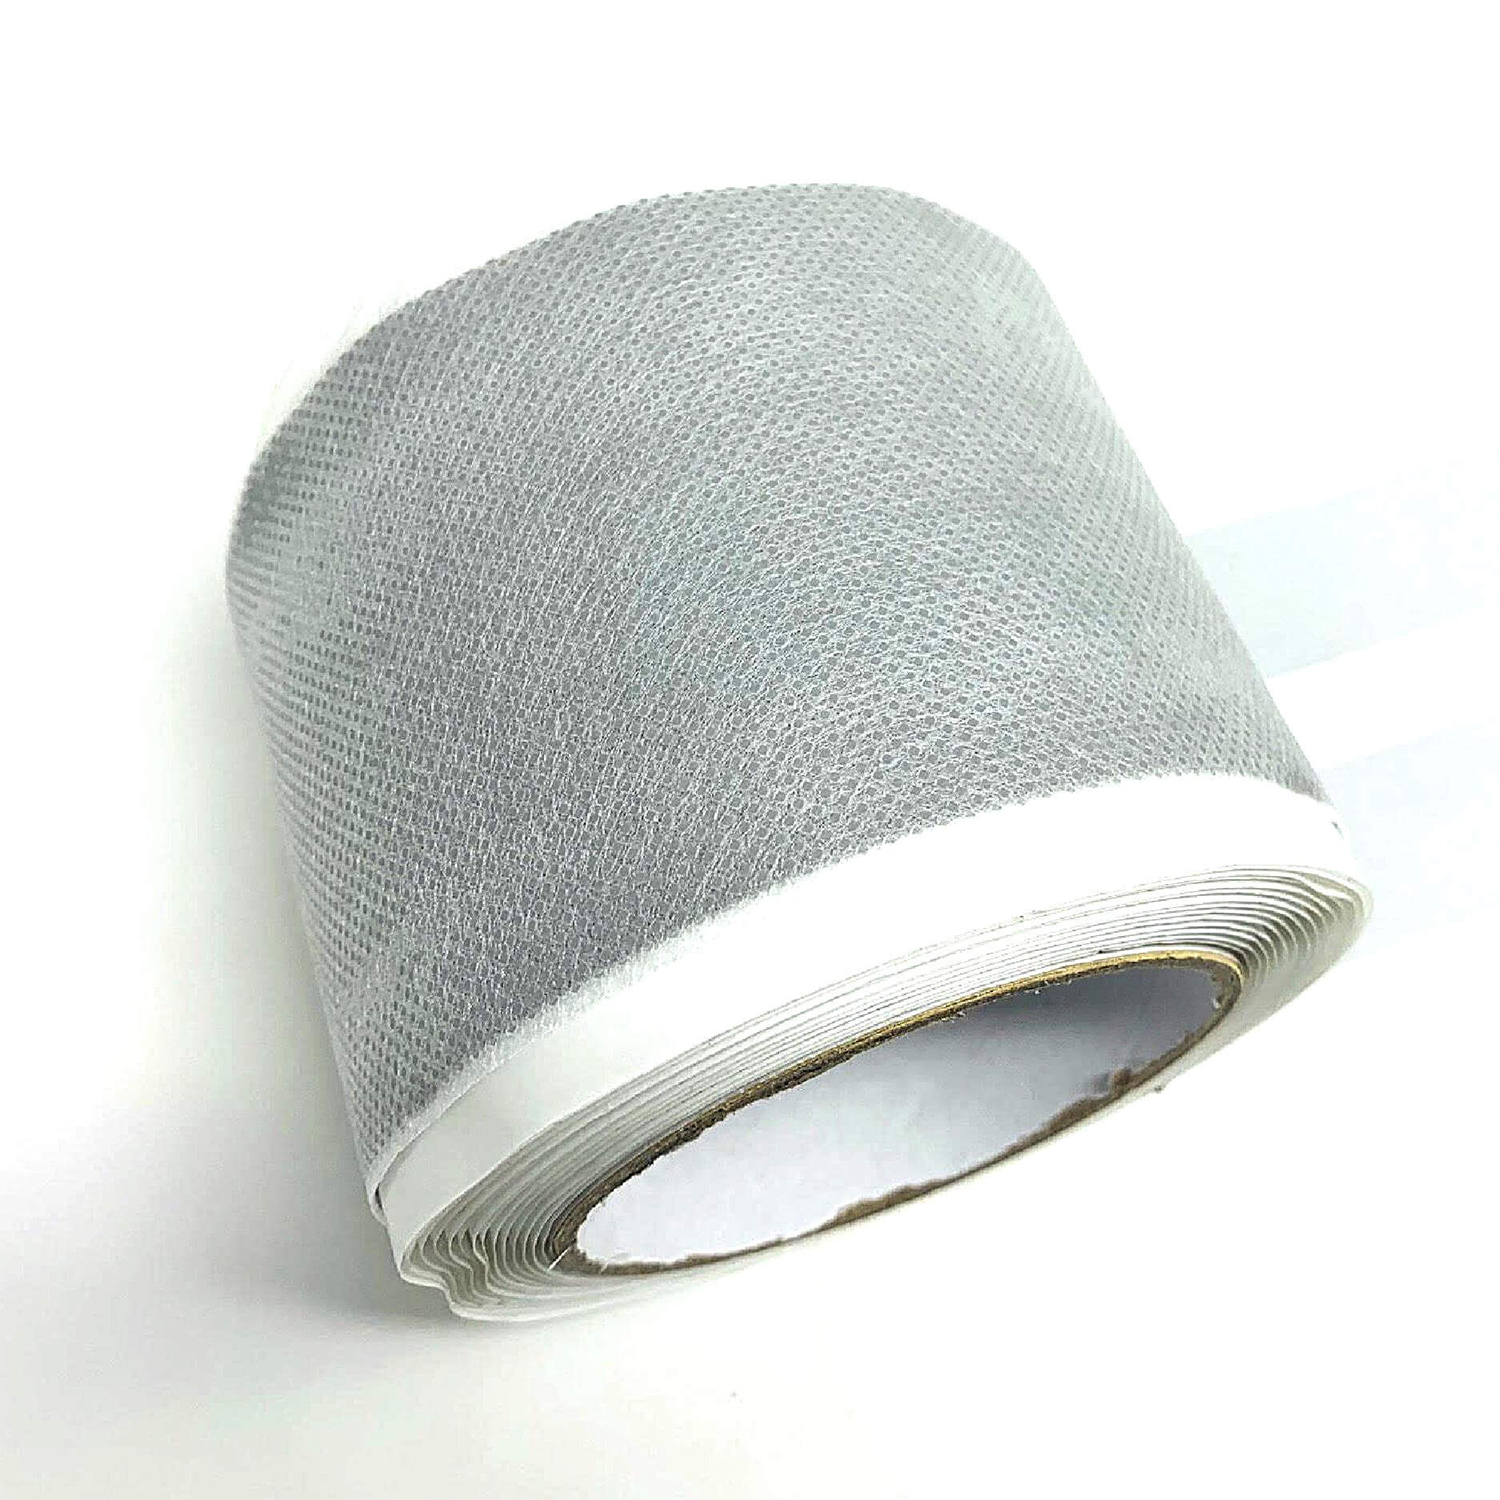 Waterproof Self-Adhesive Band 5 X 17' - White